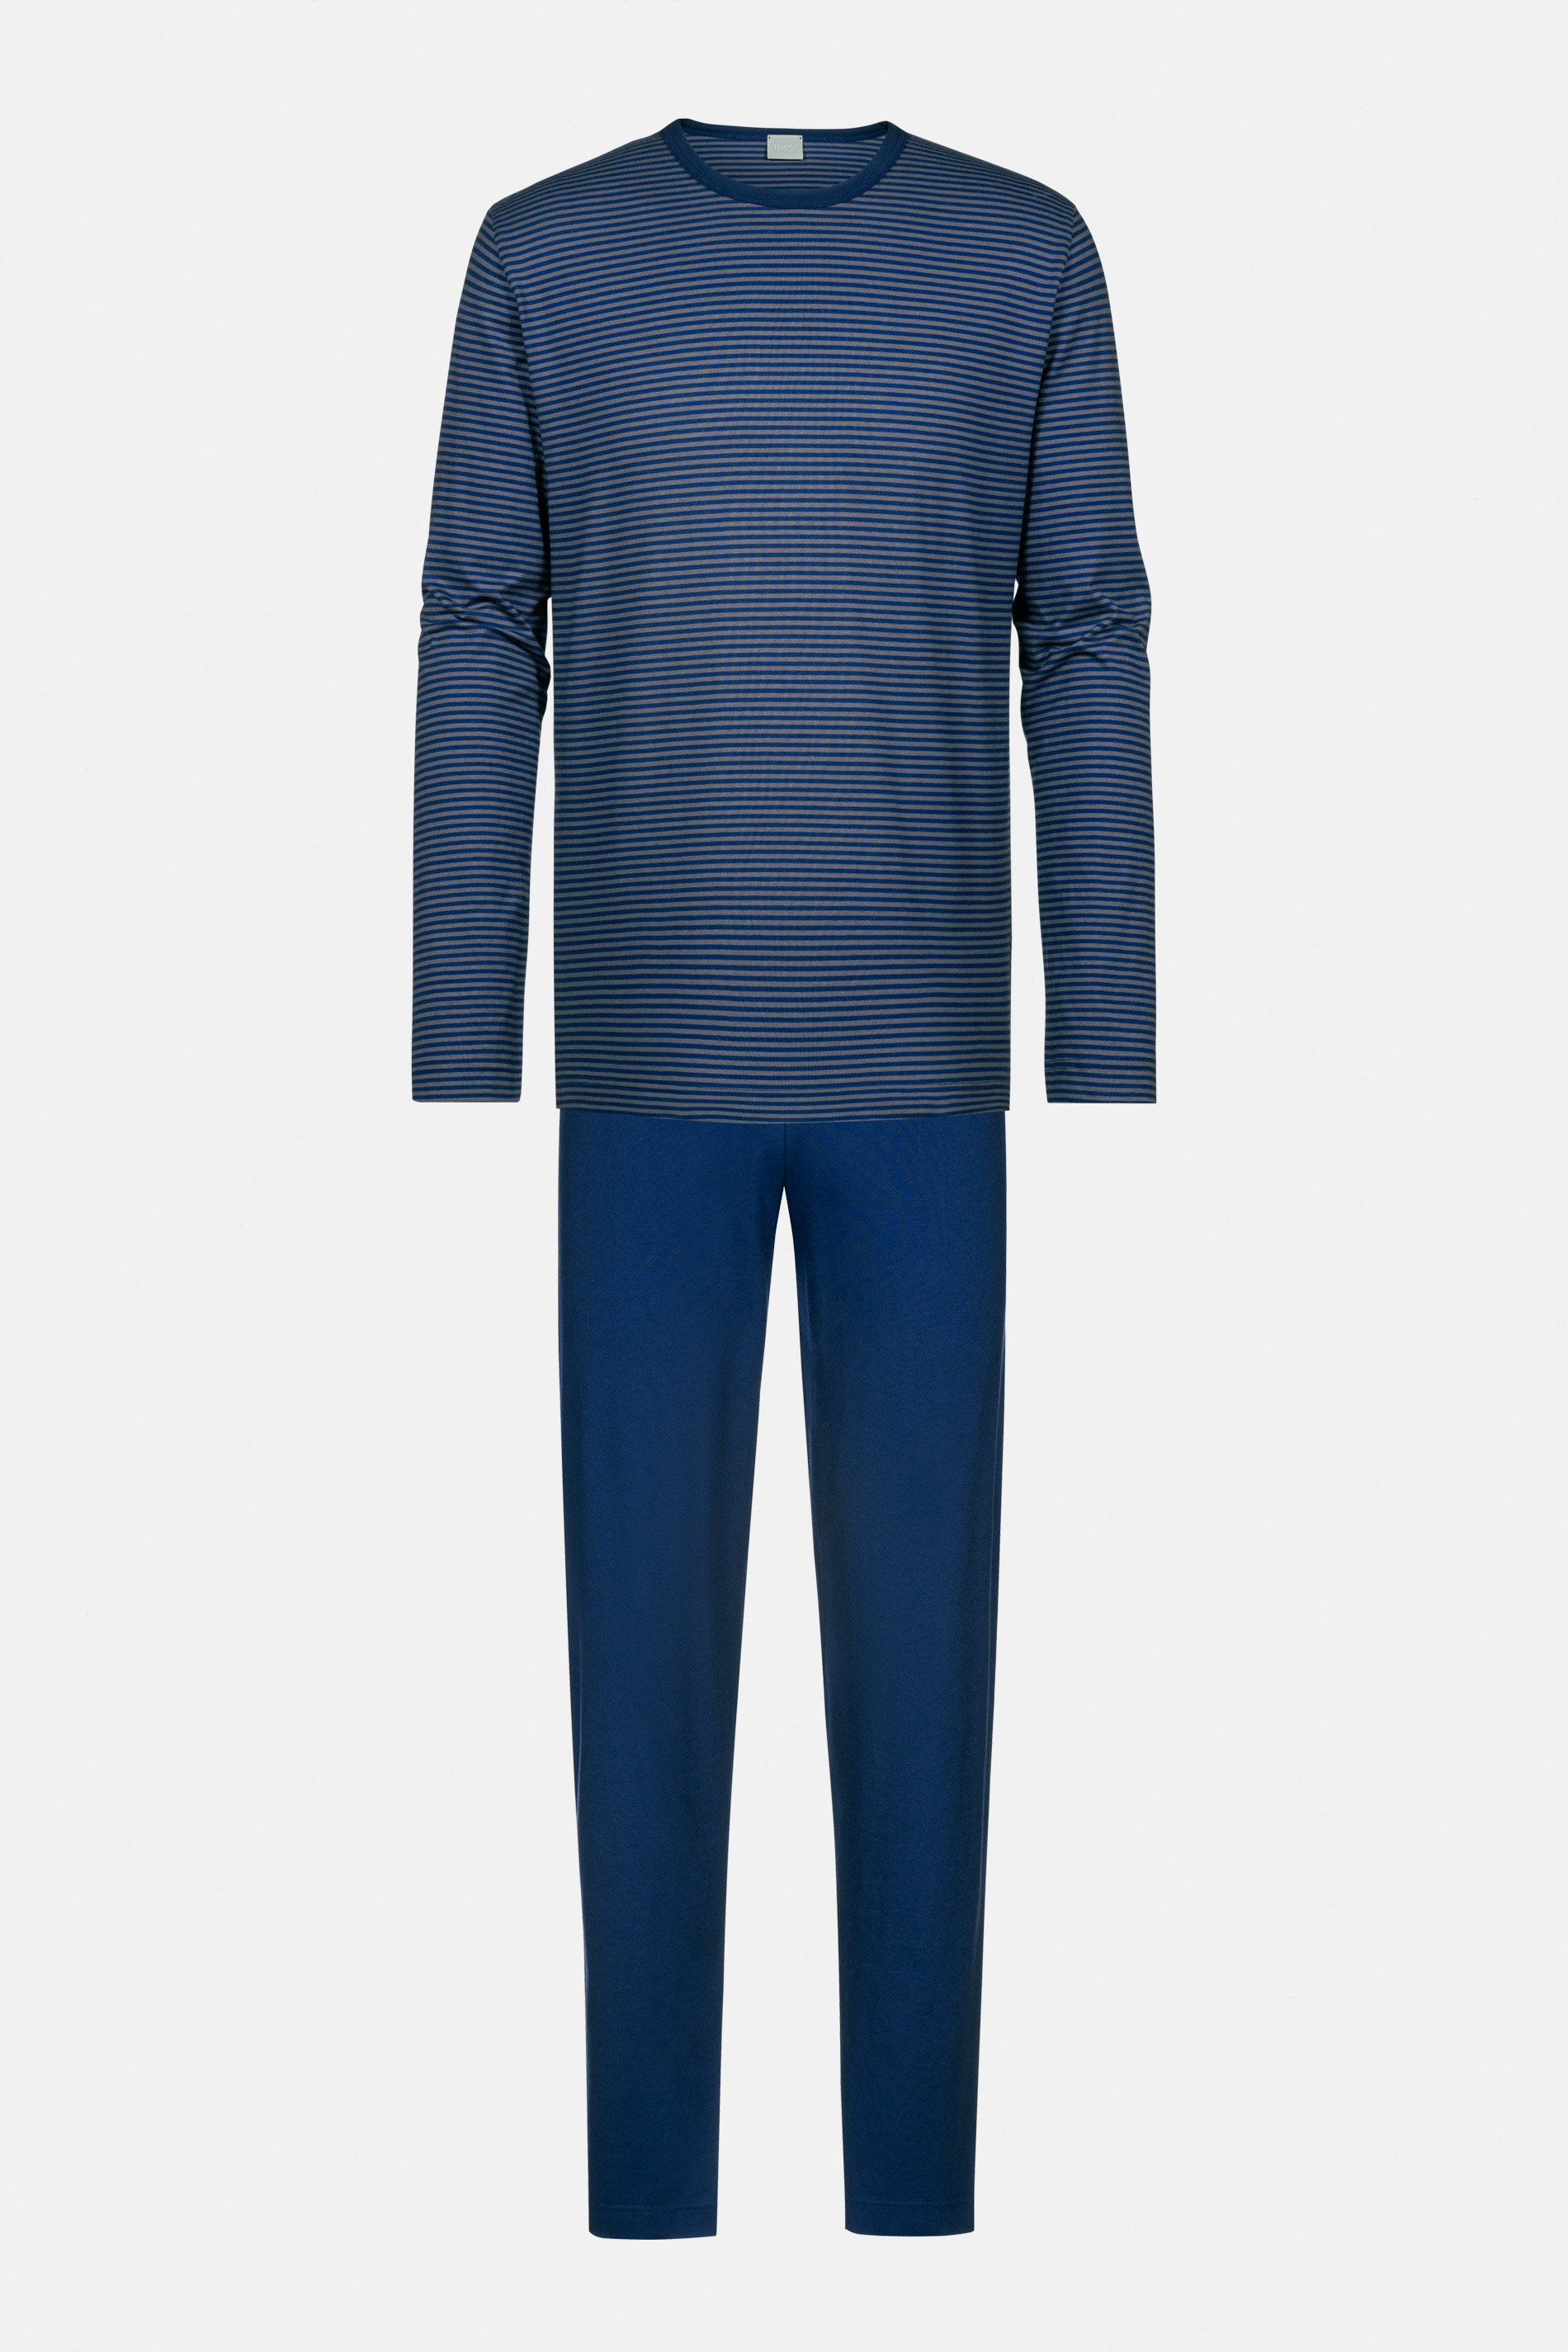 Pyjama Neptune Serie Cardwell Uitknippen | mey®